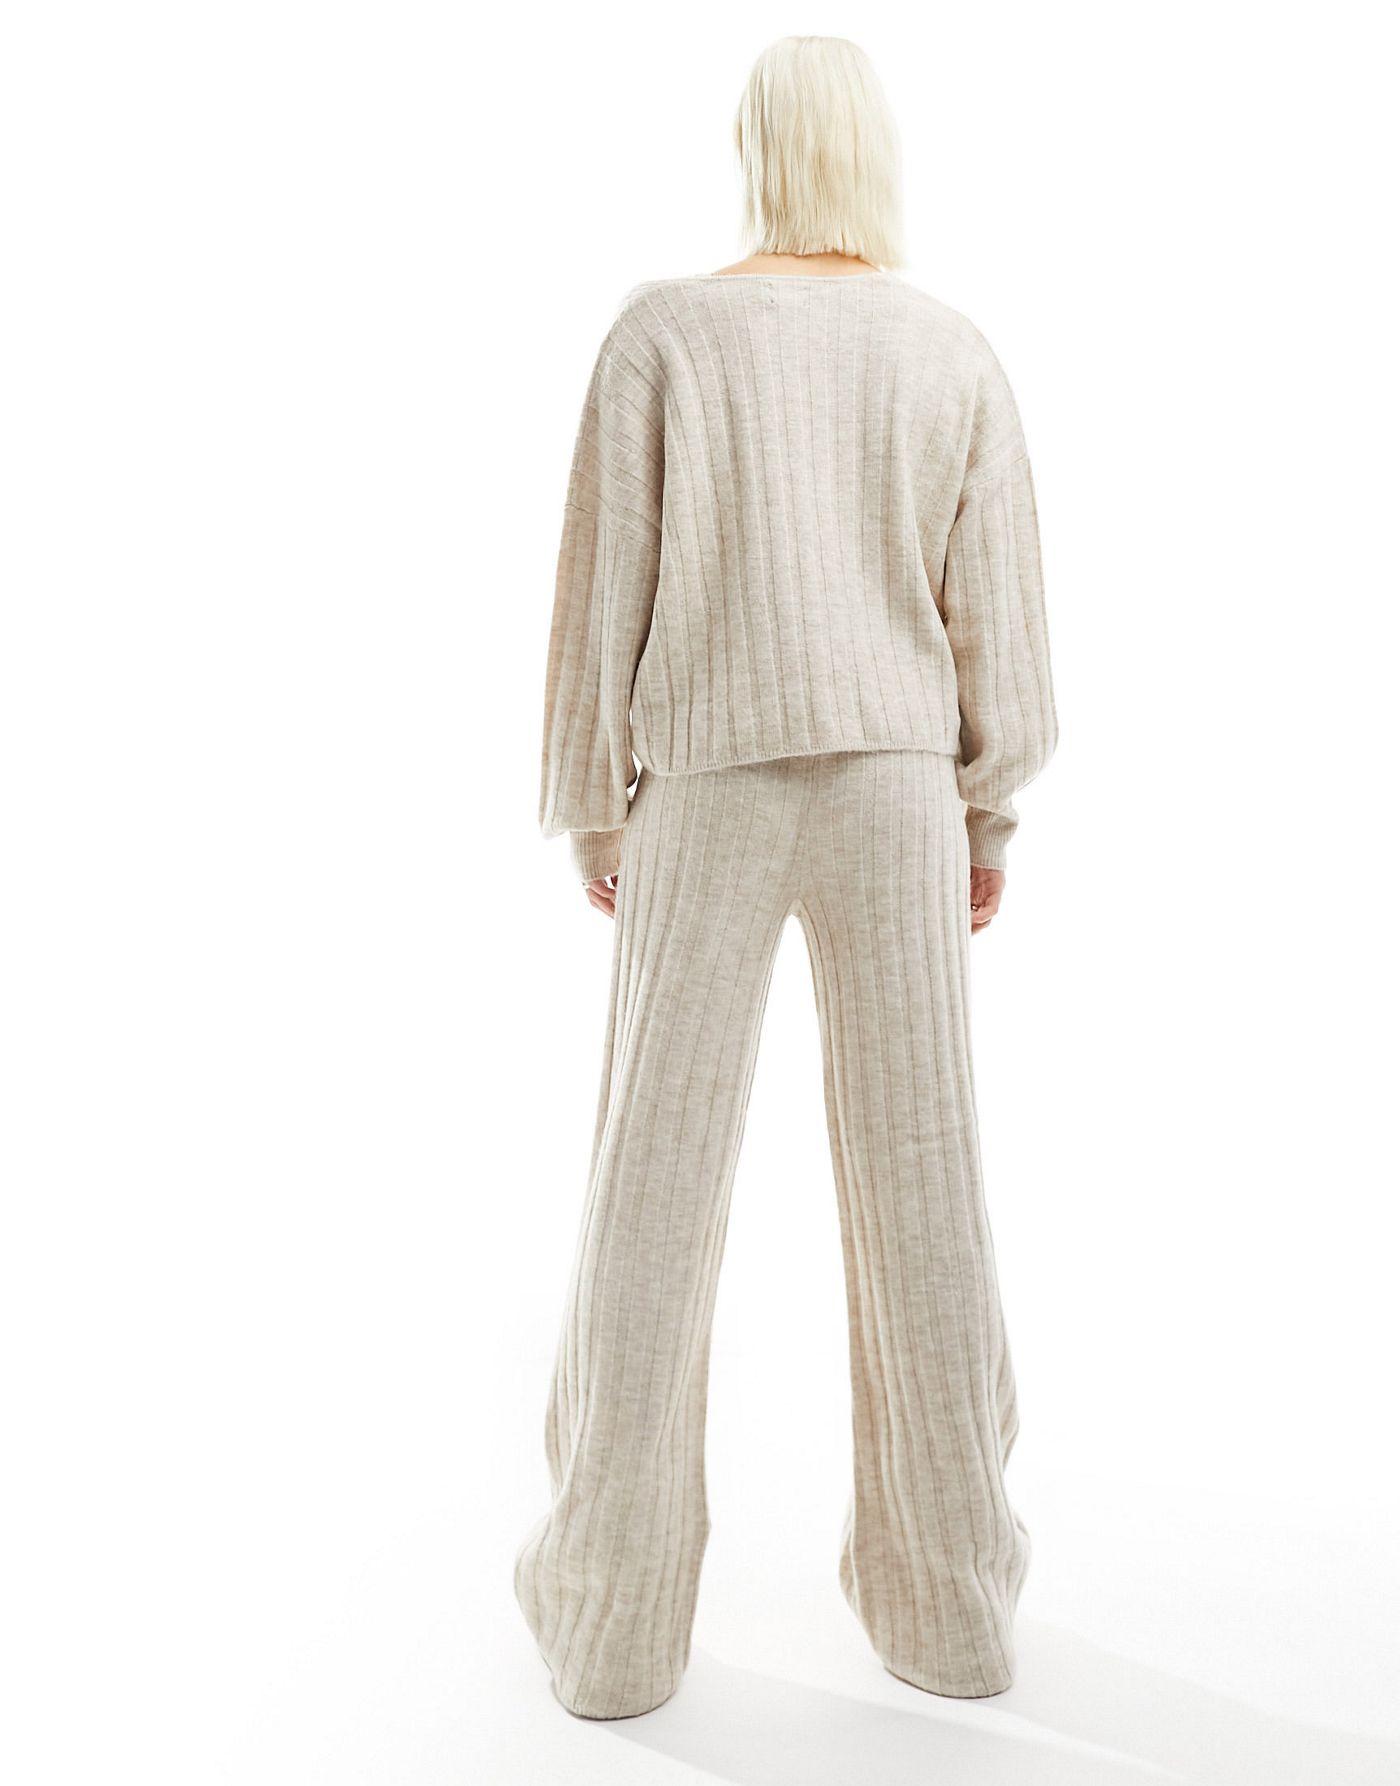 ASOS DESIGN premium lounge knitted jumper & trouser set in beige